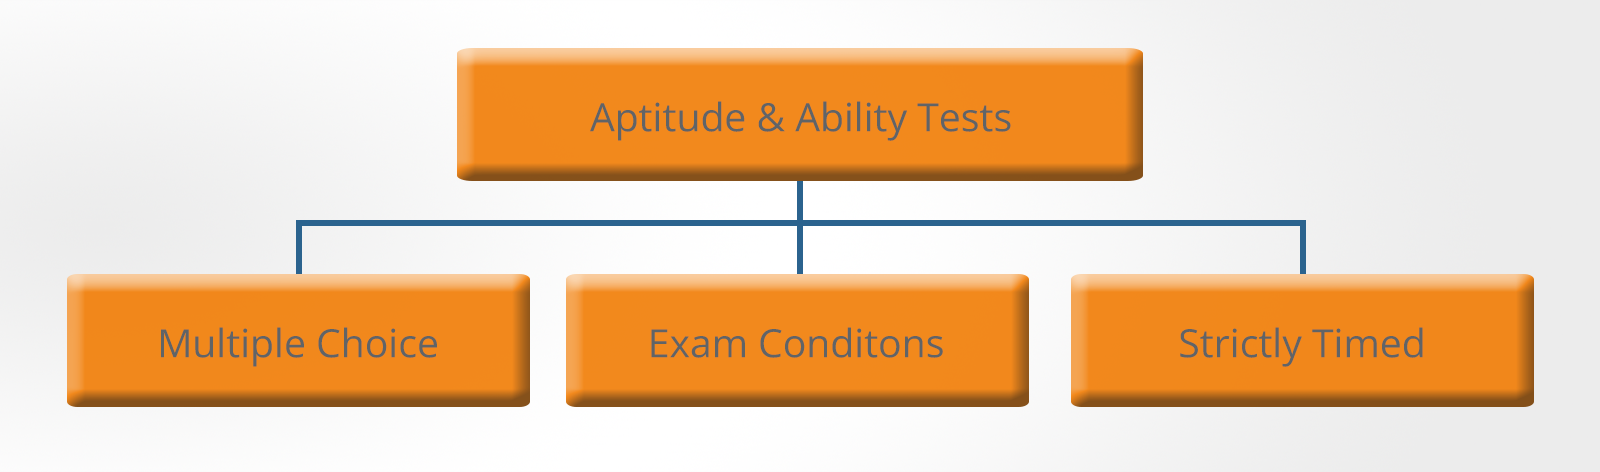 Aptitude Tests